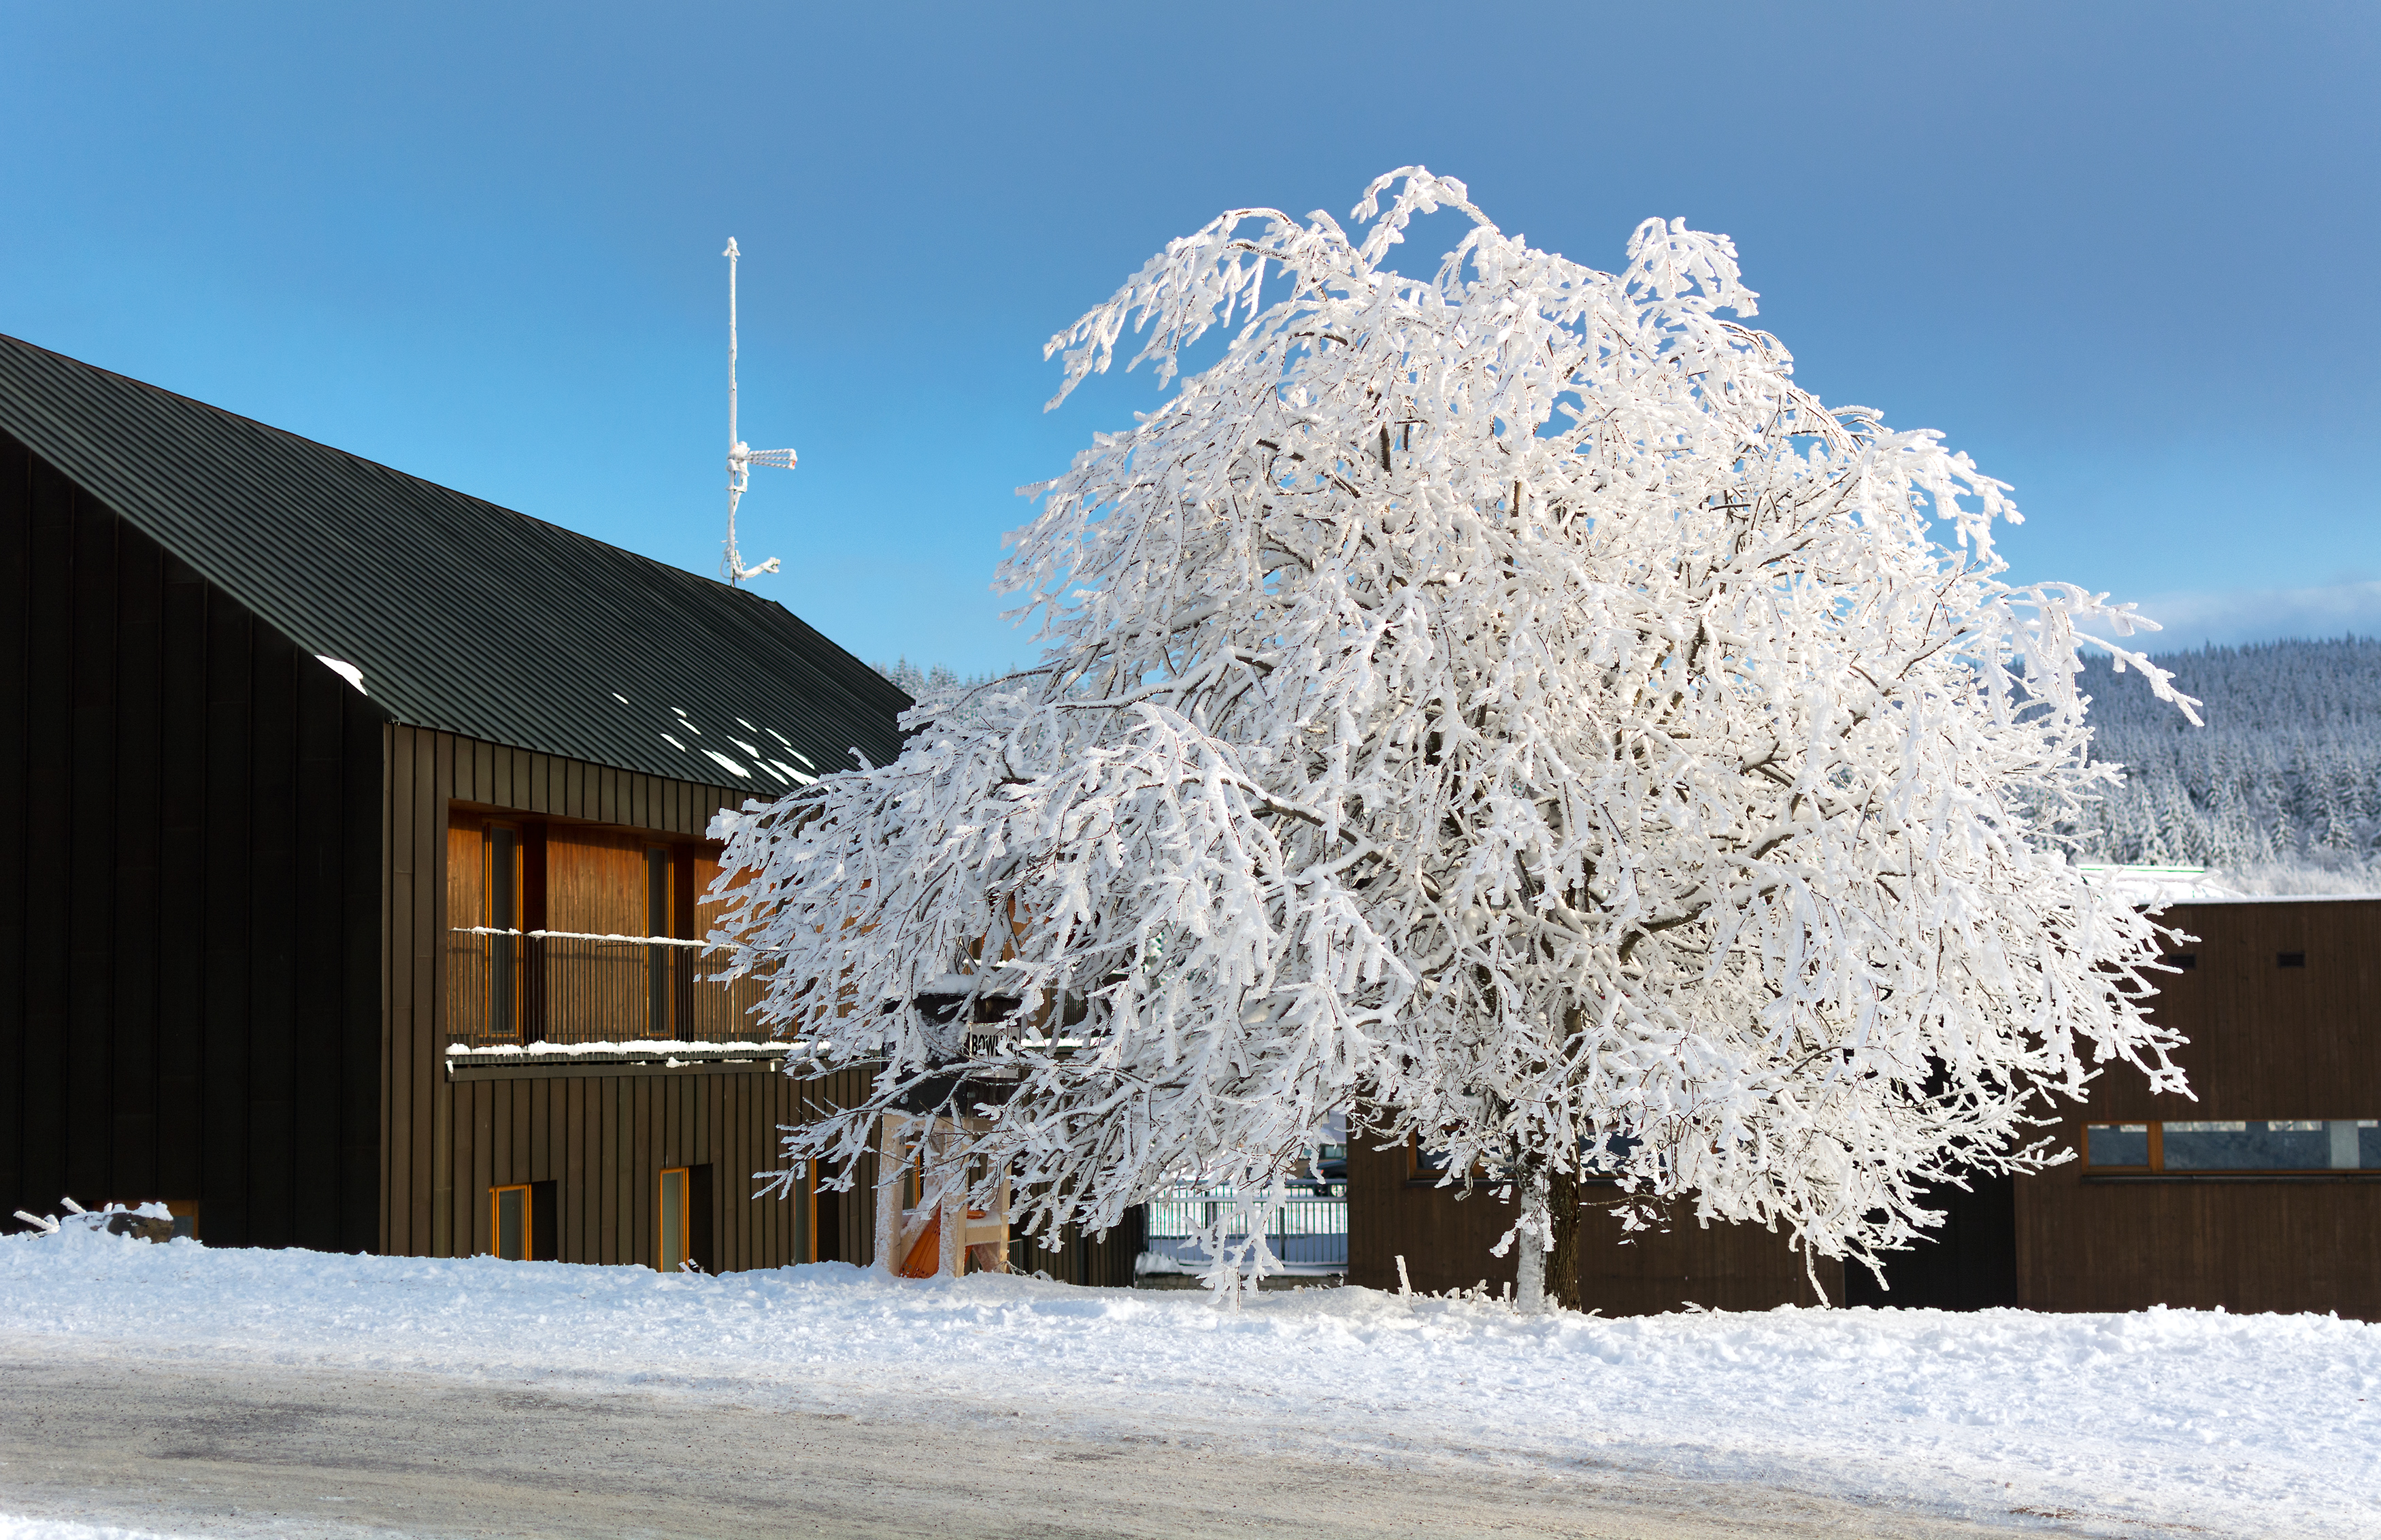 Free Image: Frozen Tree and House | Libreshot Public Domain Photos